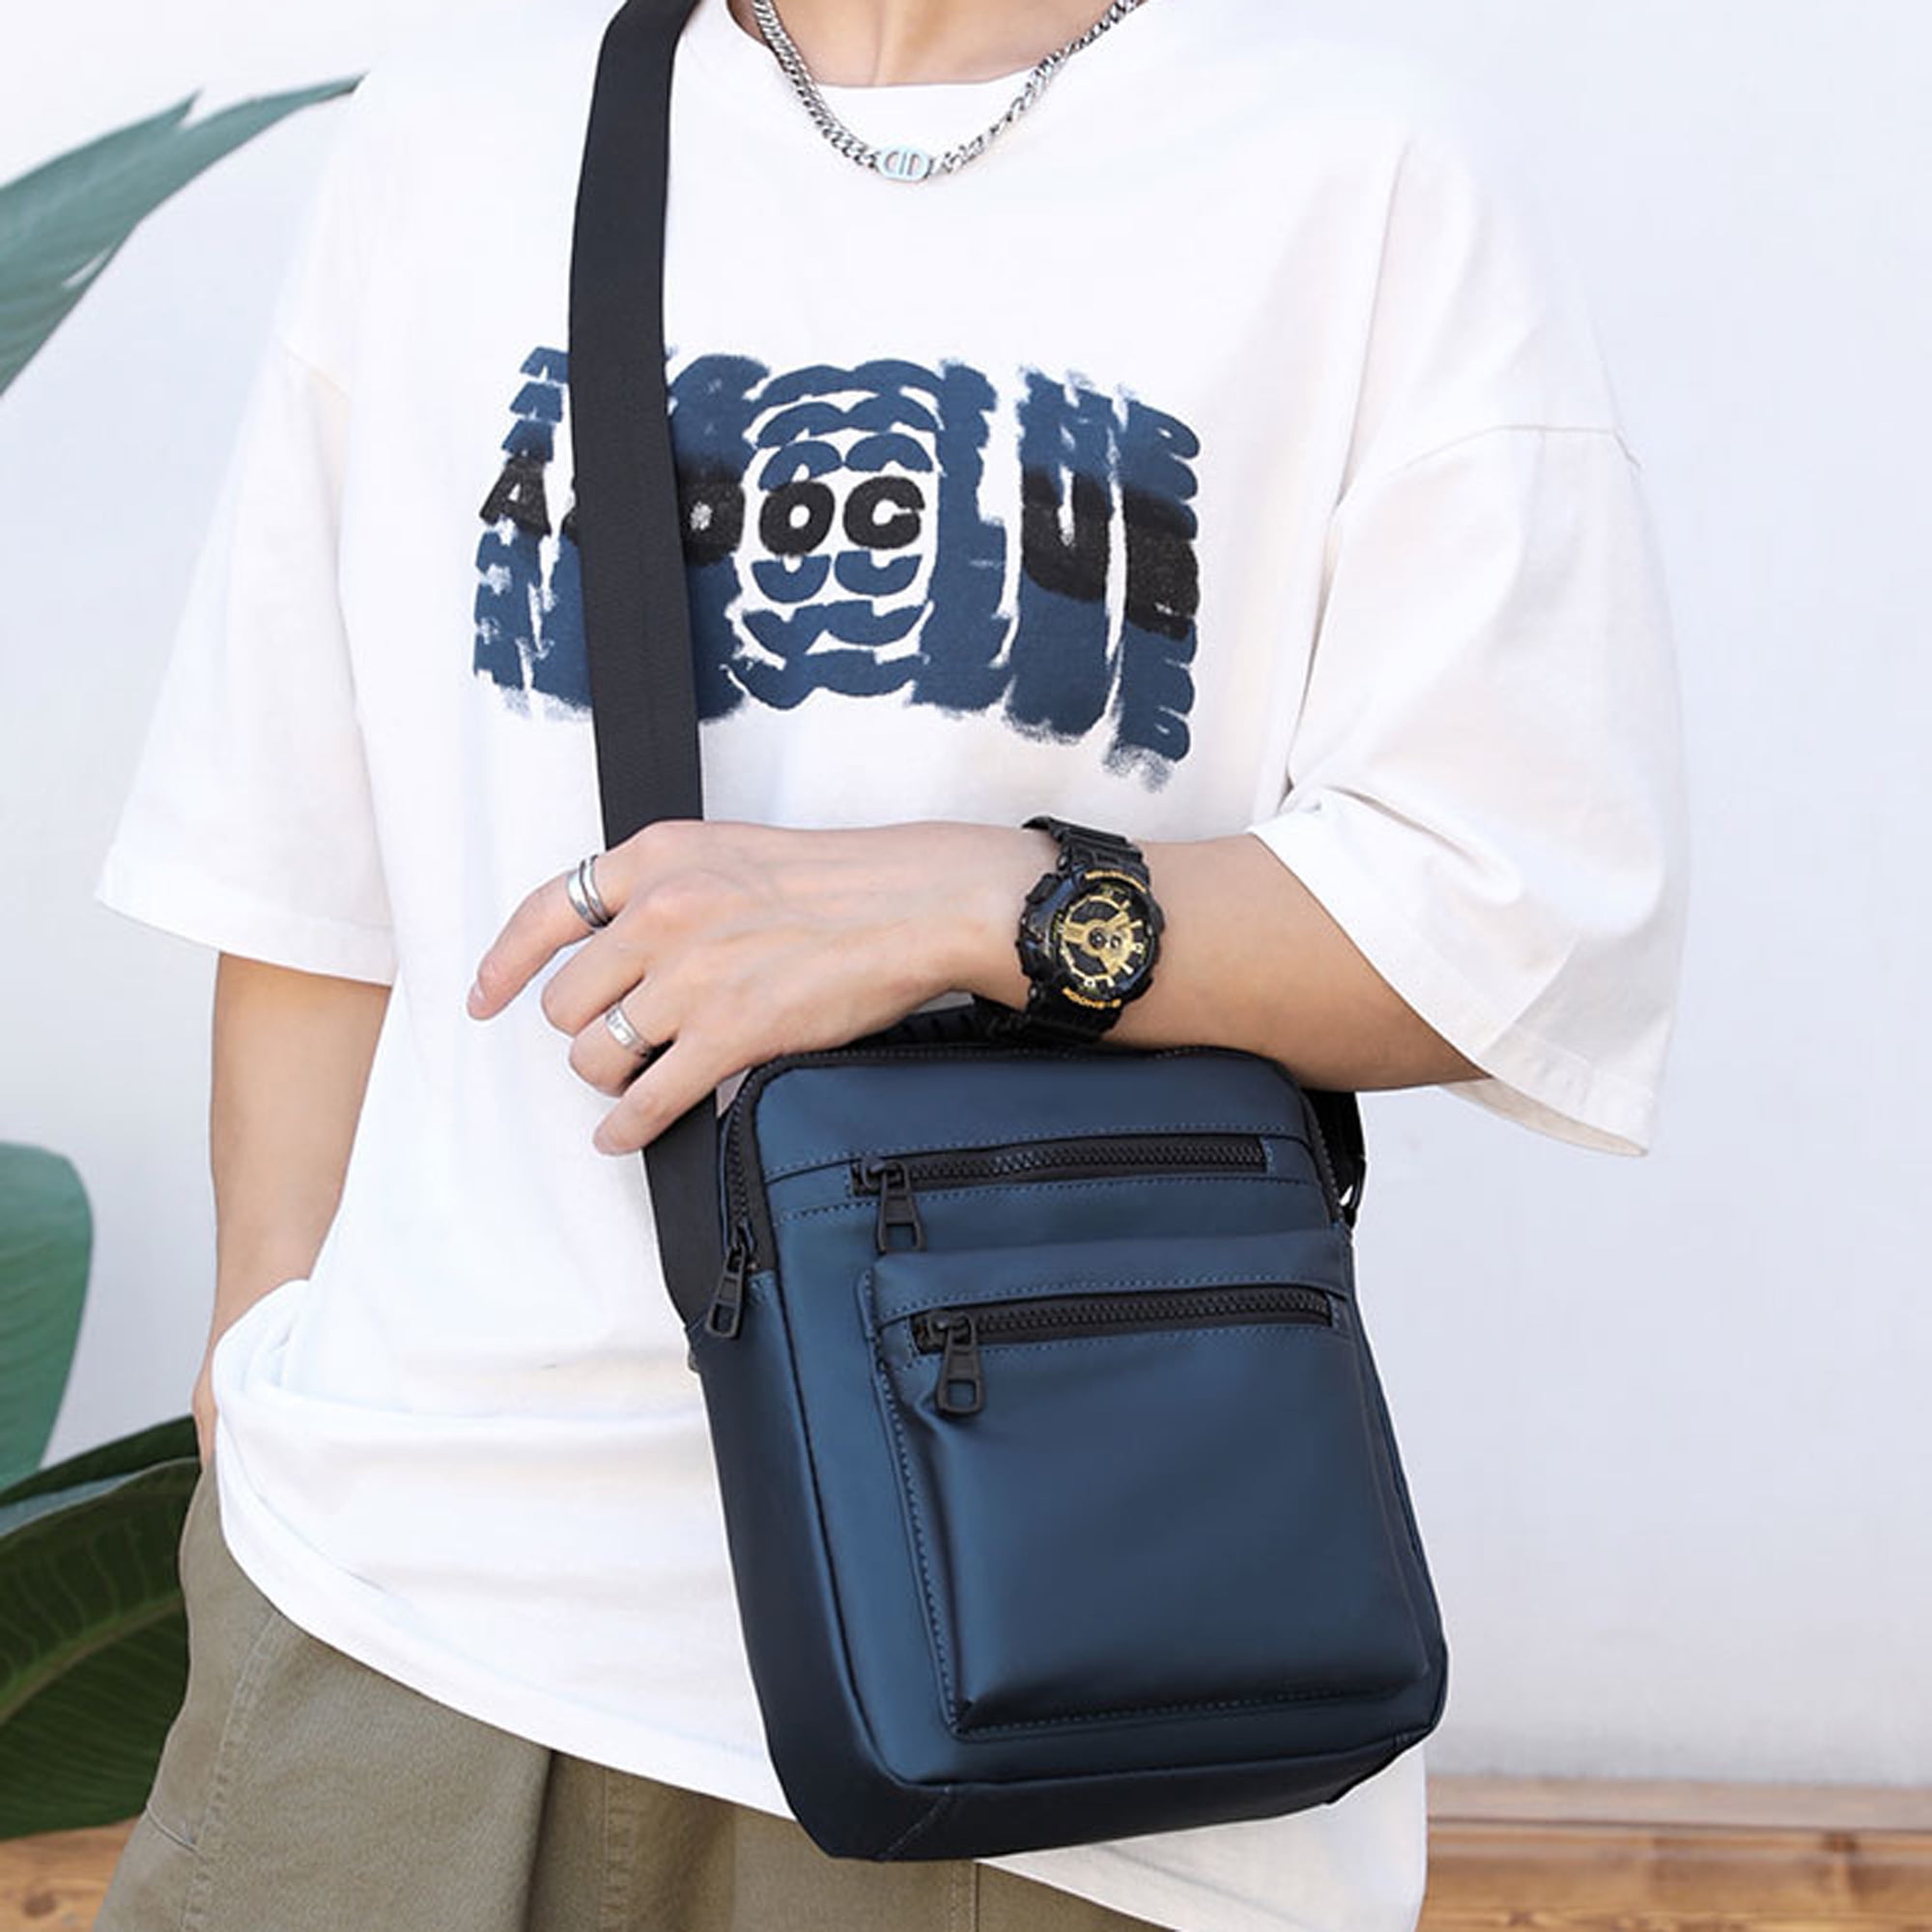 Laidan Women's Wallet Shoulder Bag Multifunctional Mobile Phone Clutch Bag Crossbody Bags-Light Grey, Adult Unisex, Size: 19*11*4.5CM, Gray